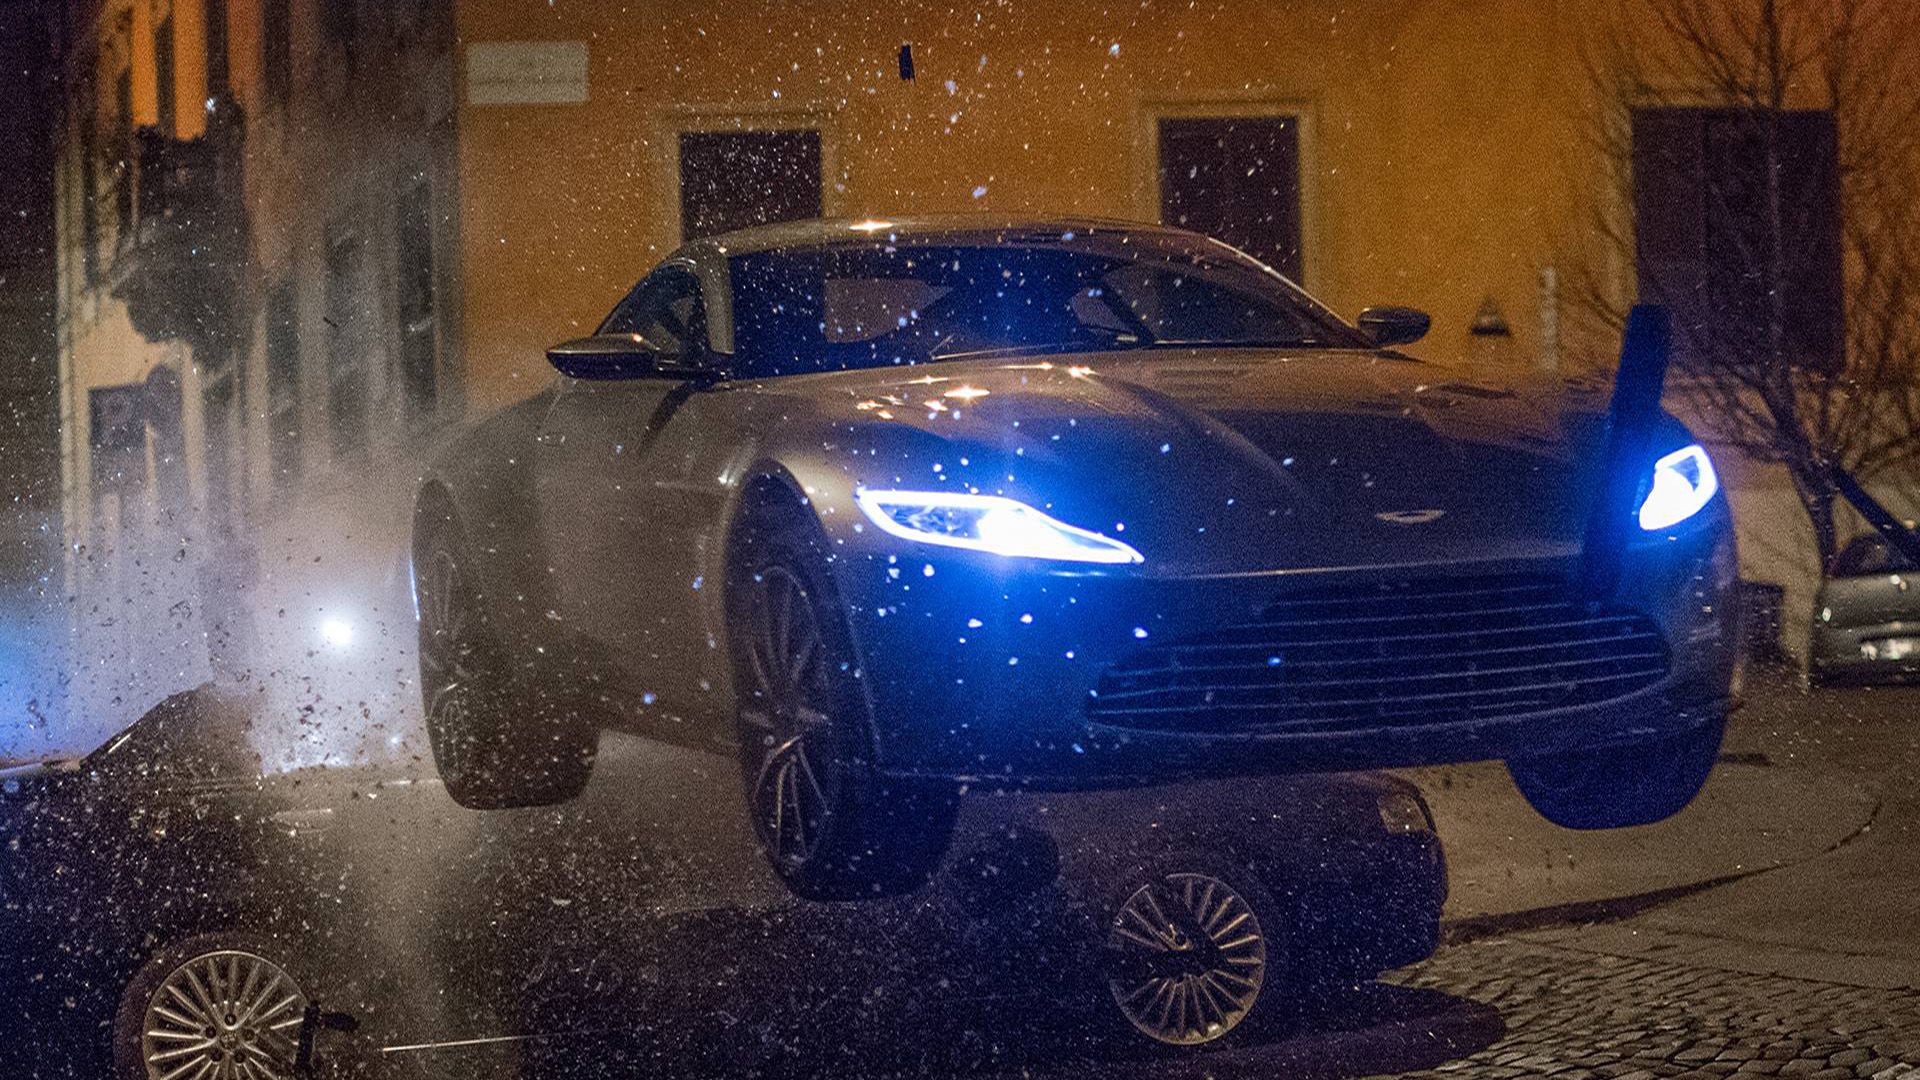 The 2015 Aston Martin DB10 